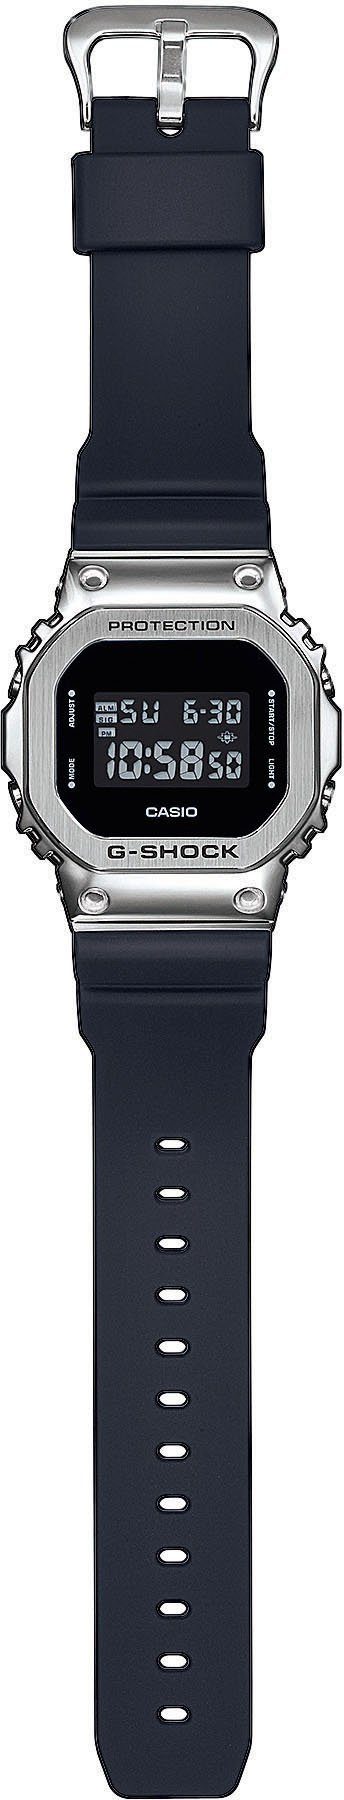 CASIO GM-5600-1ER G-SHOCK Chronograph